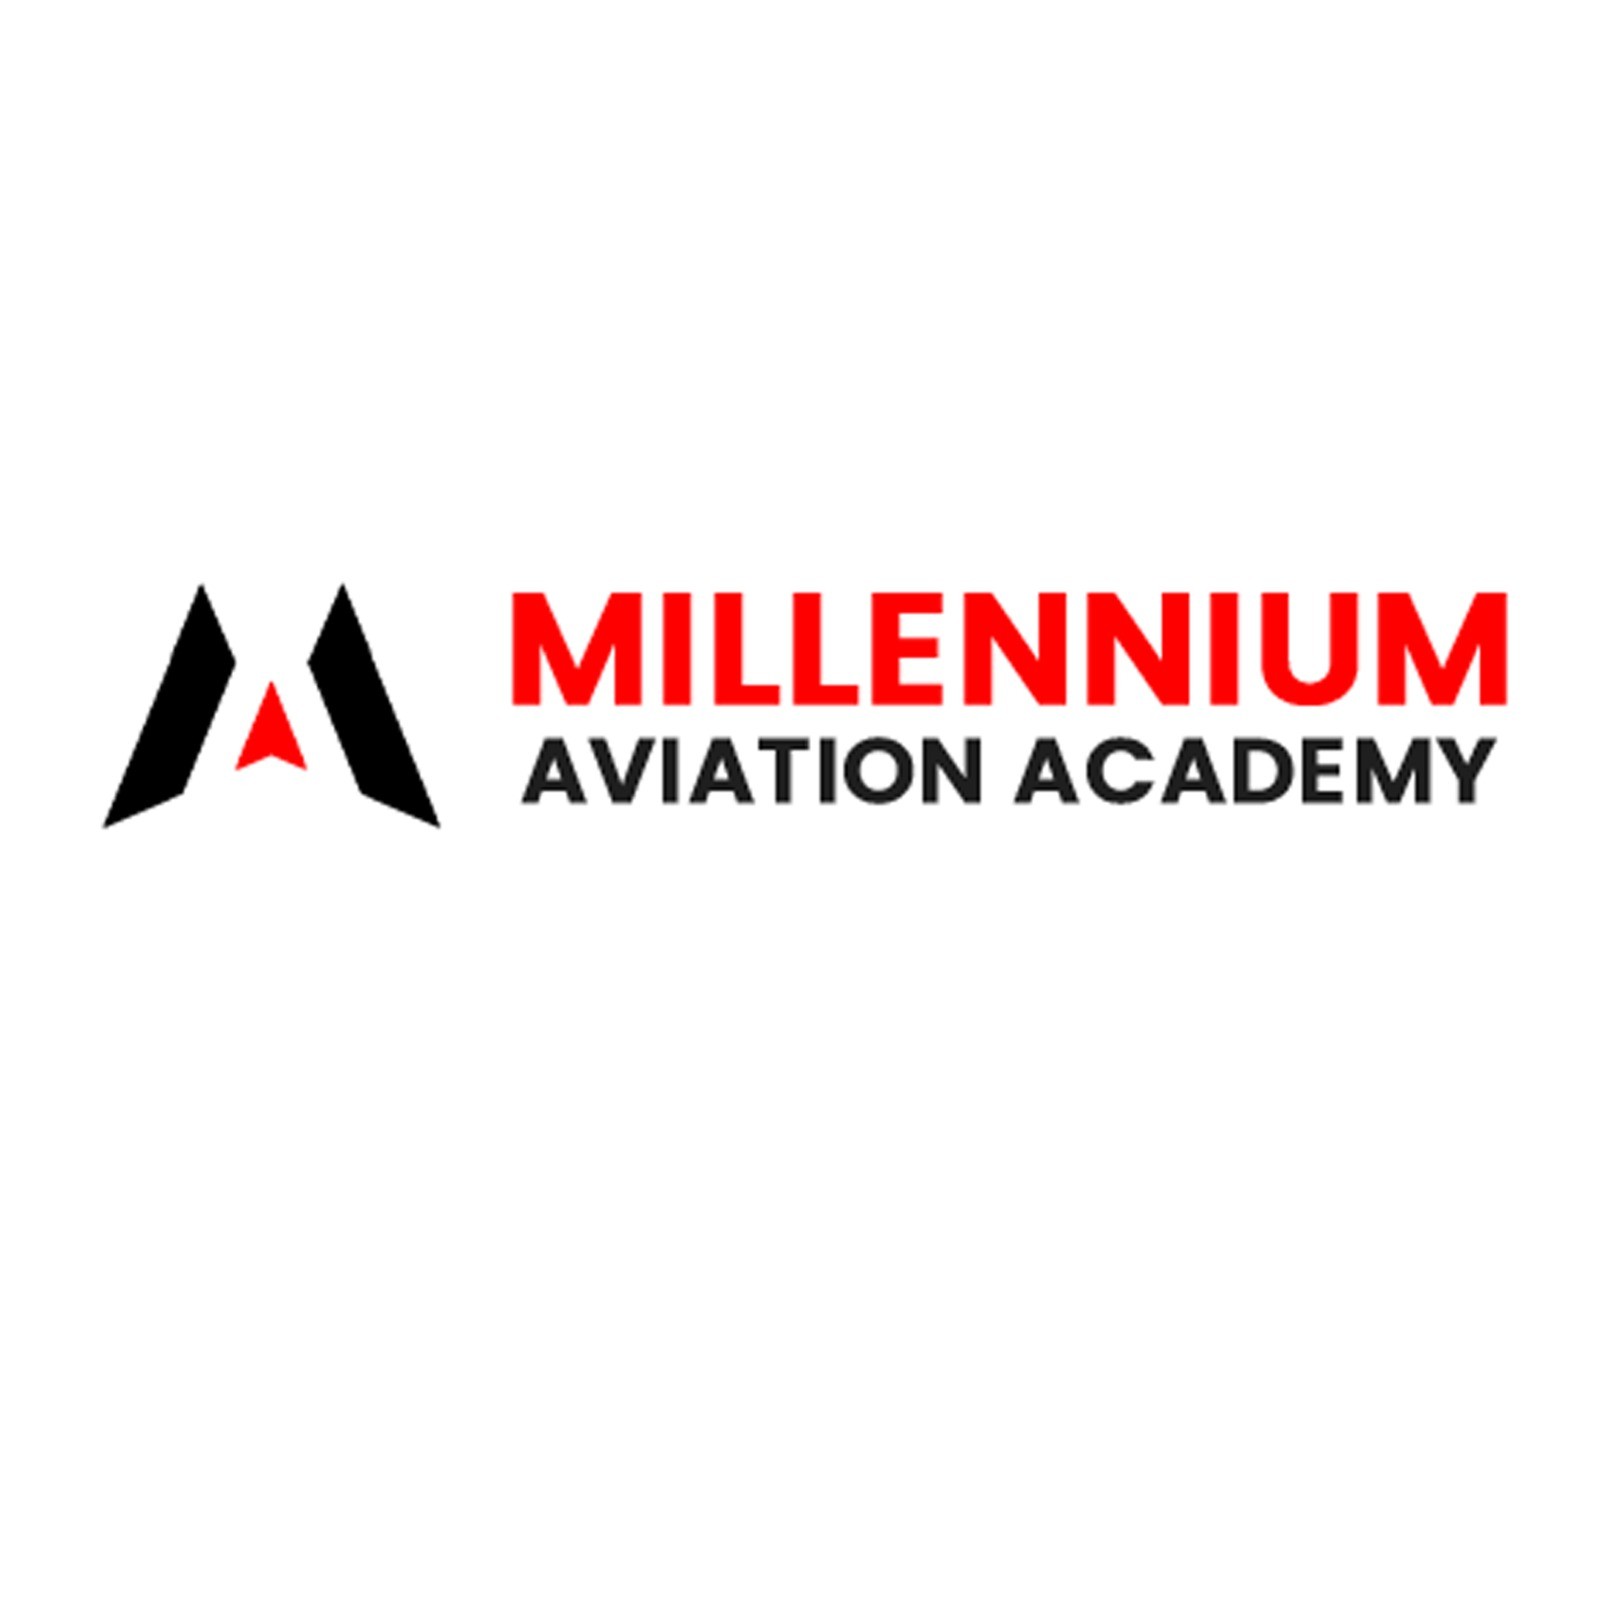 millenniumaviation academy